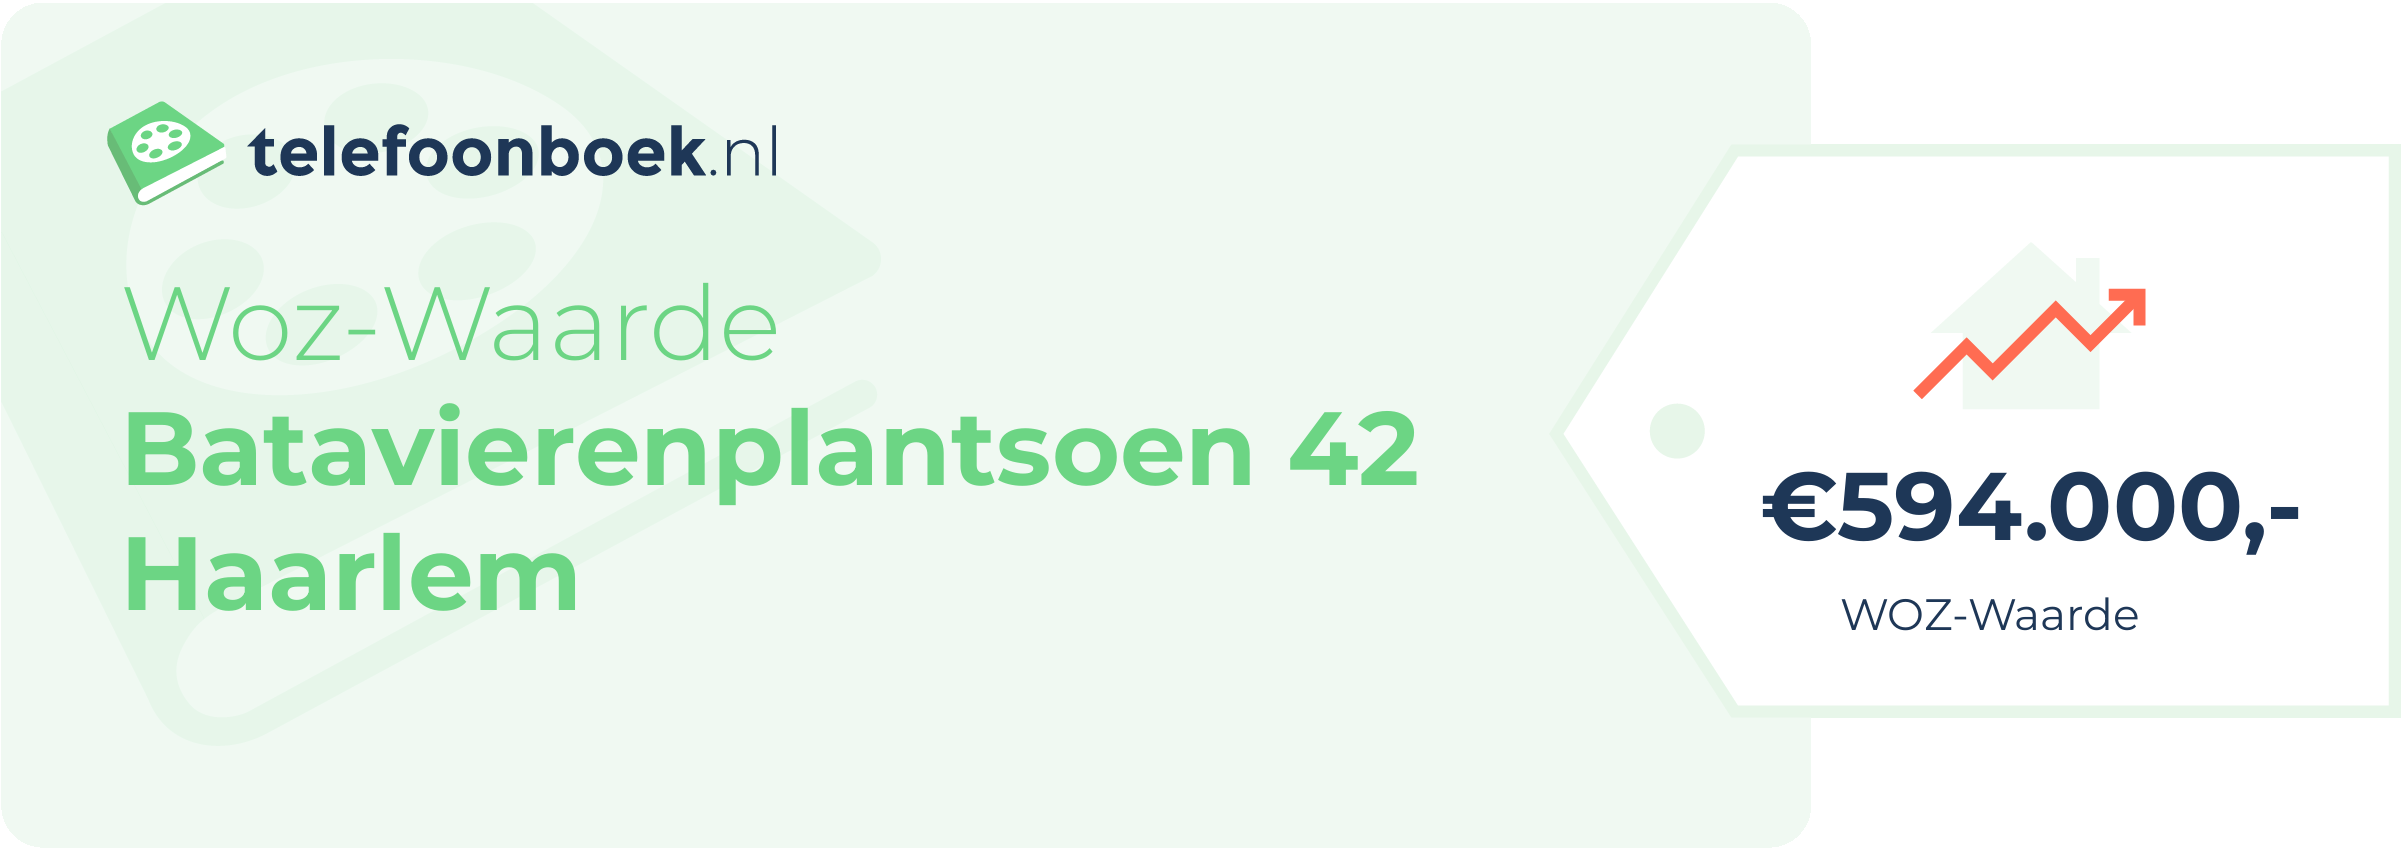 WOZ-waarde Batavierenplantsoen 42 Haarlem